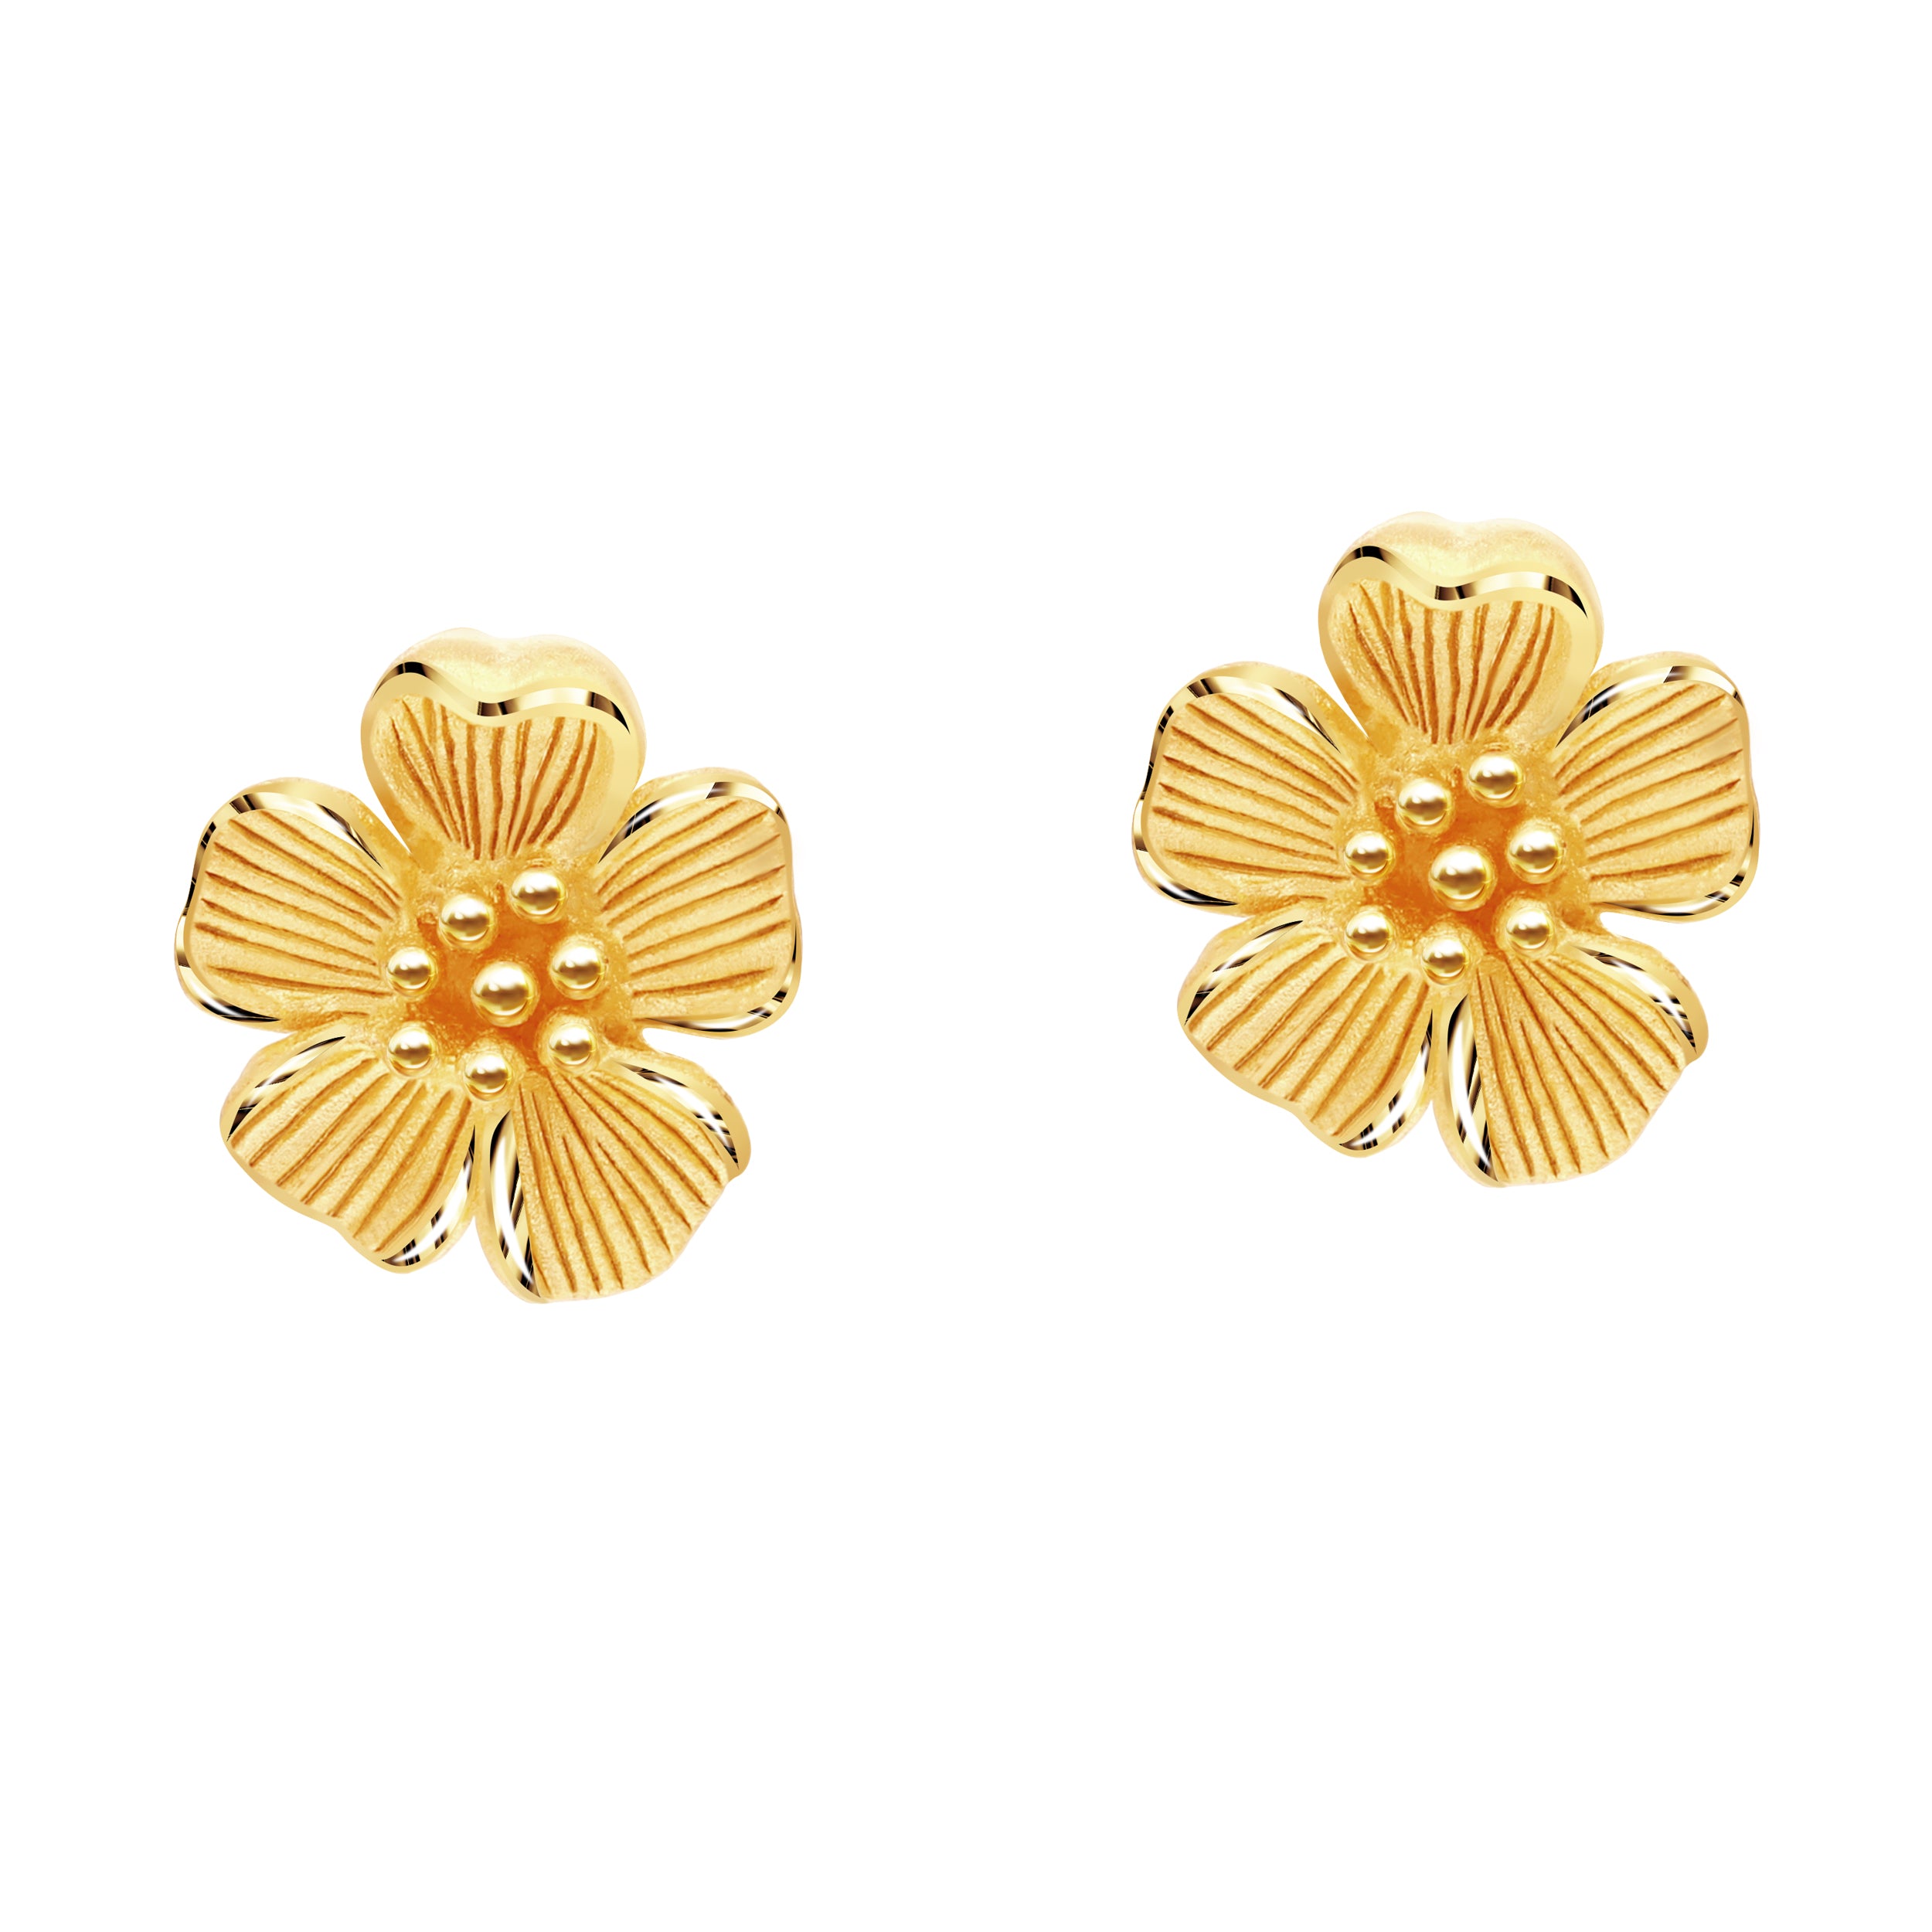 Buy 20k Gold Earrings Ear Stud Handmade Jewelry Traditional Design Online  in India - Etsy